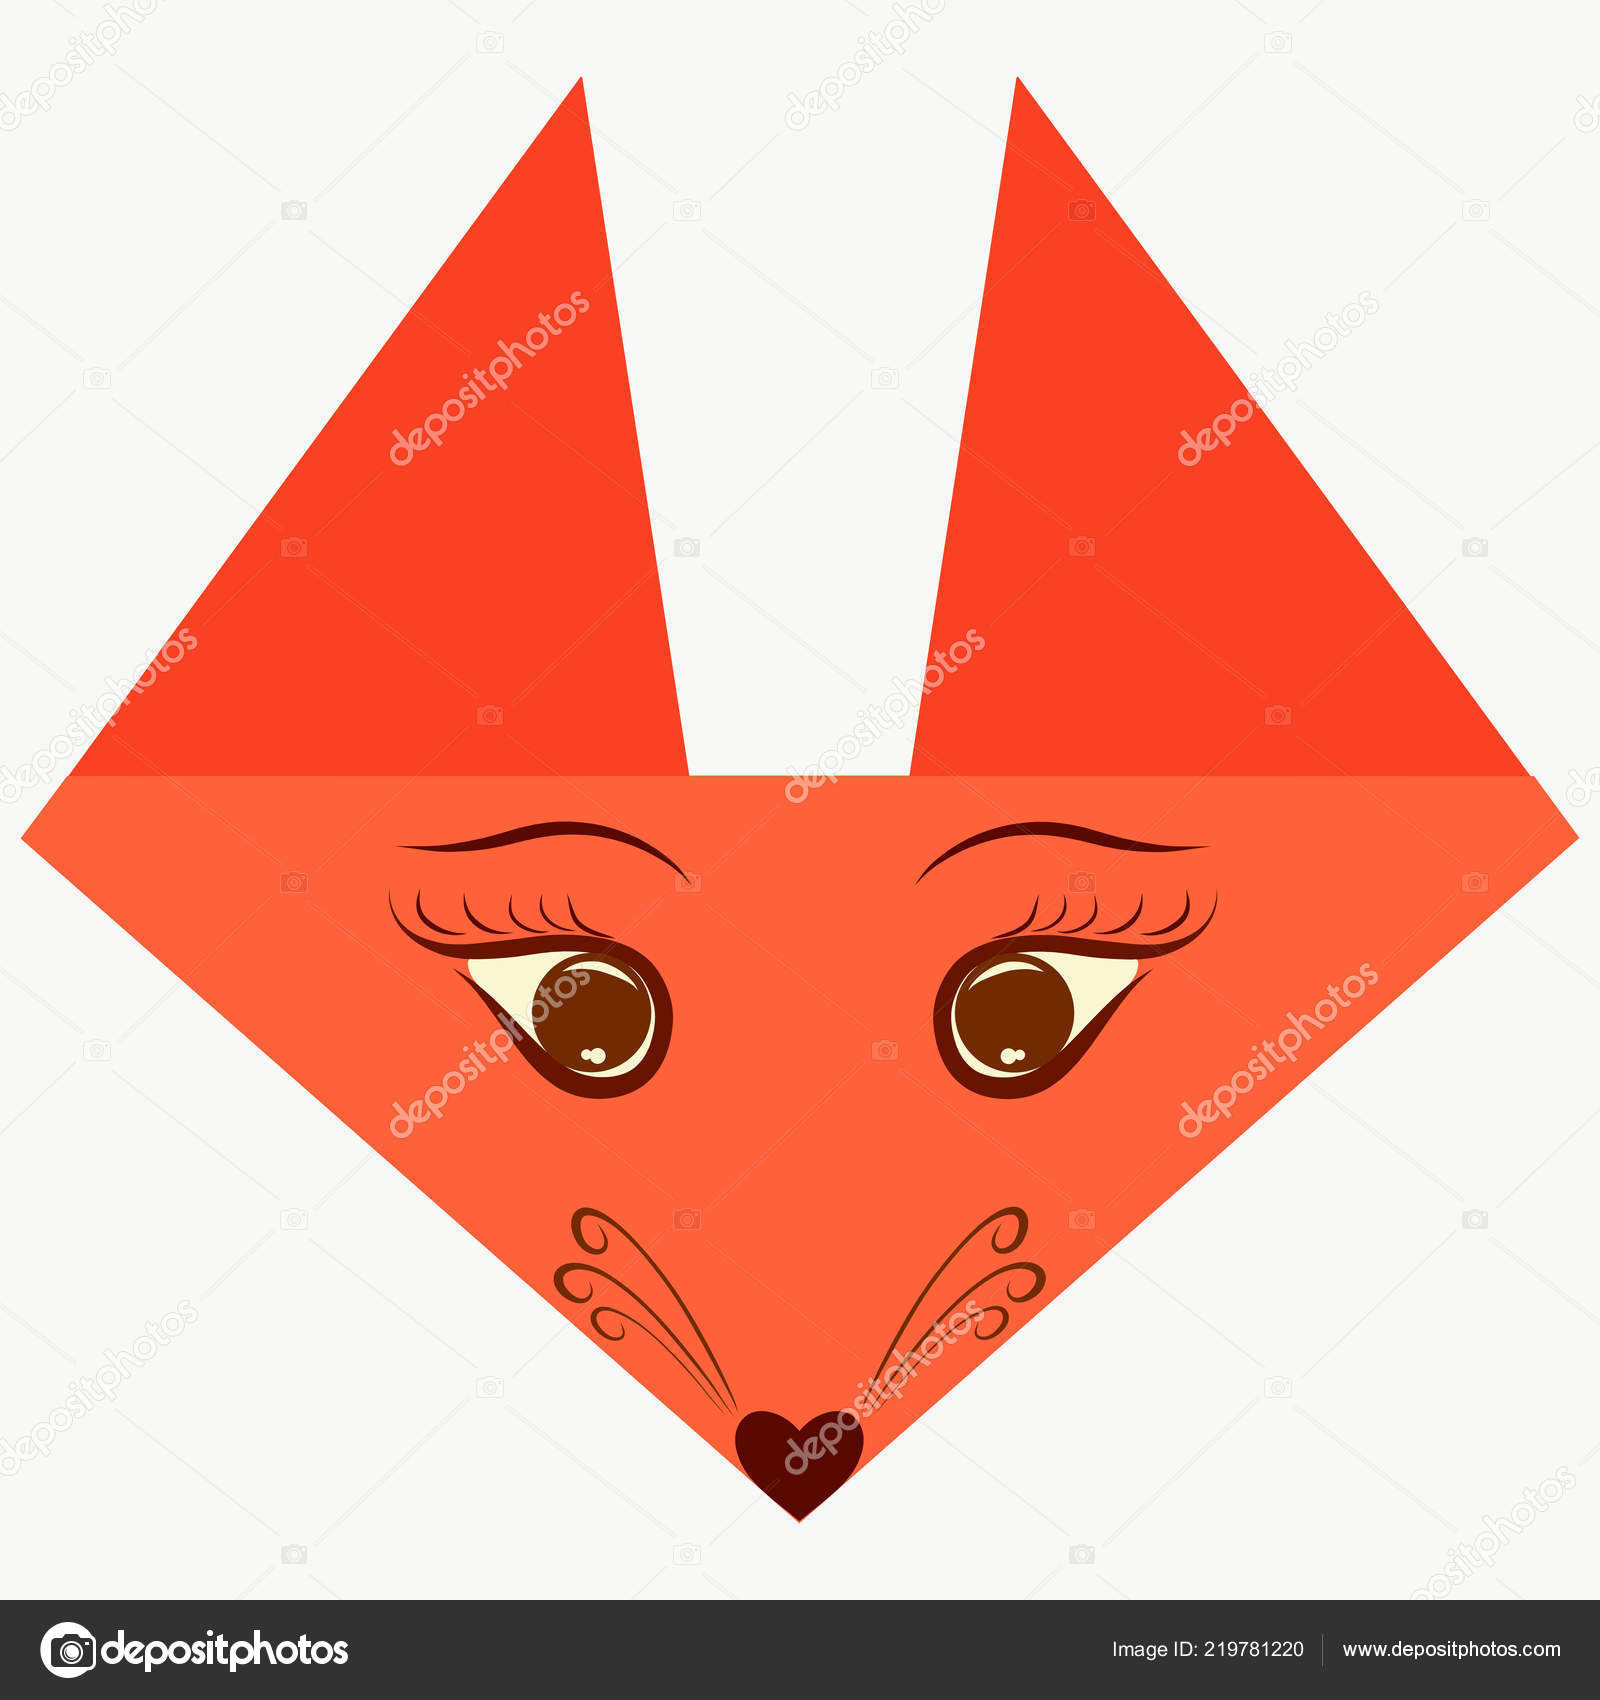 Origami Fox Face Triangular Head Orange Fox Face Origami Stock Photo